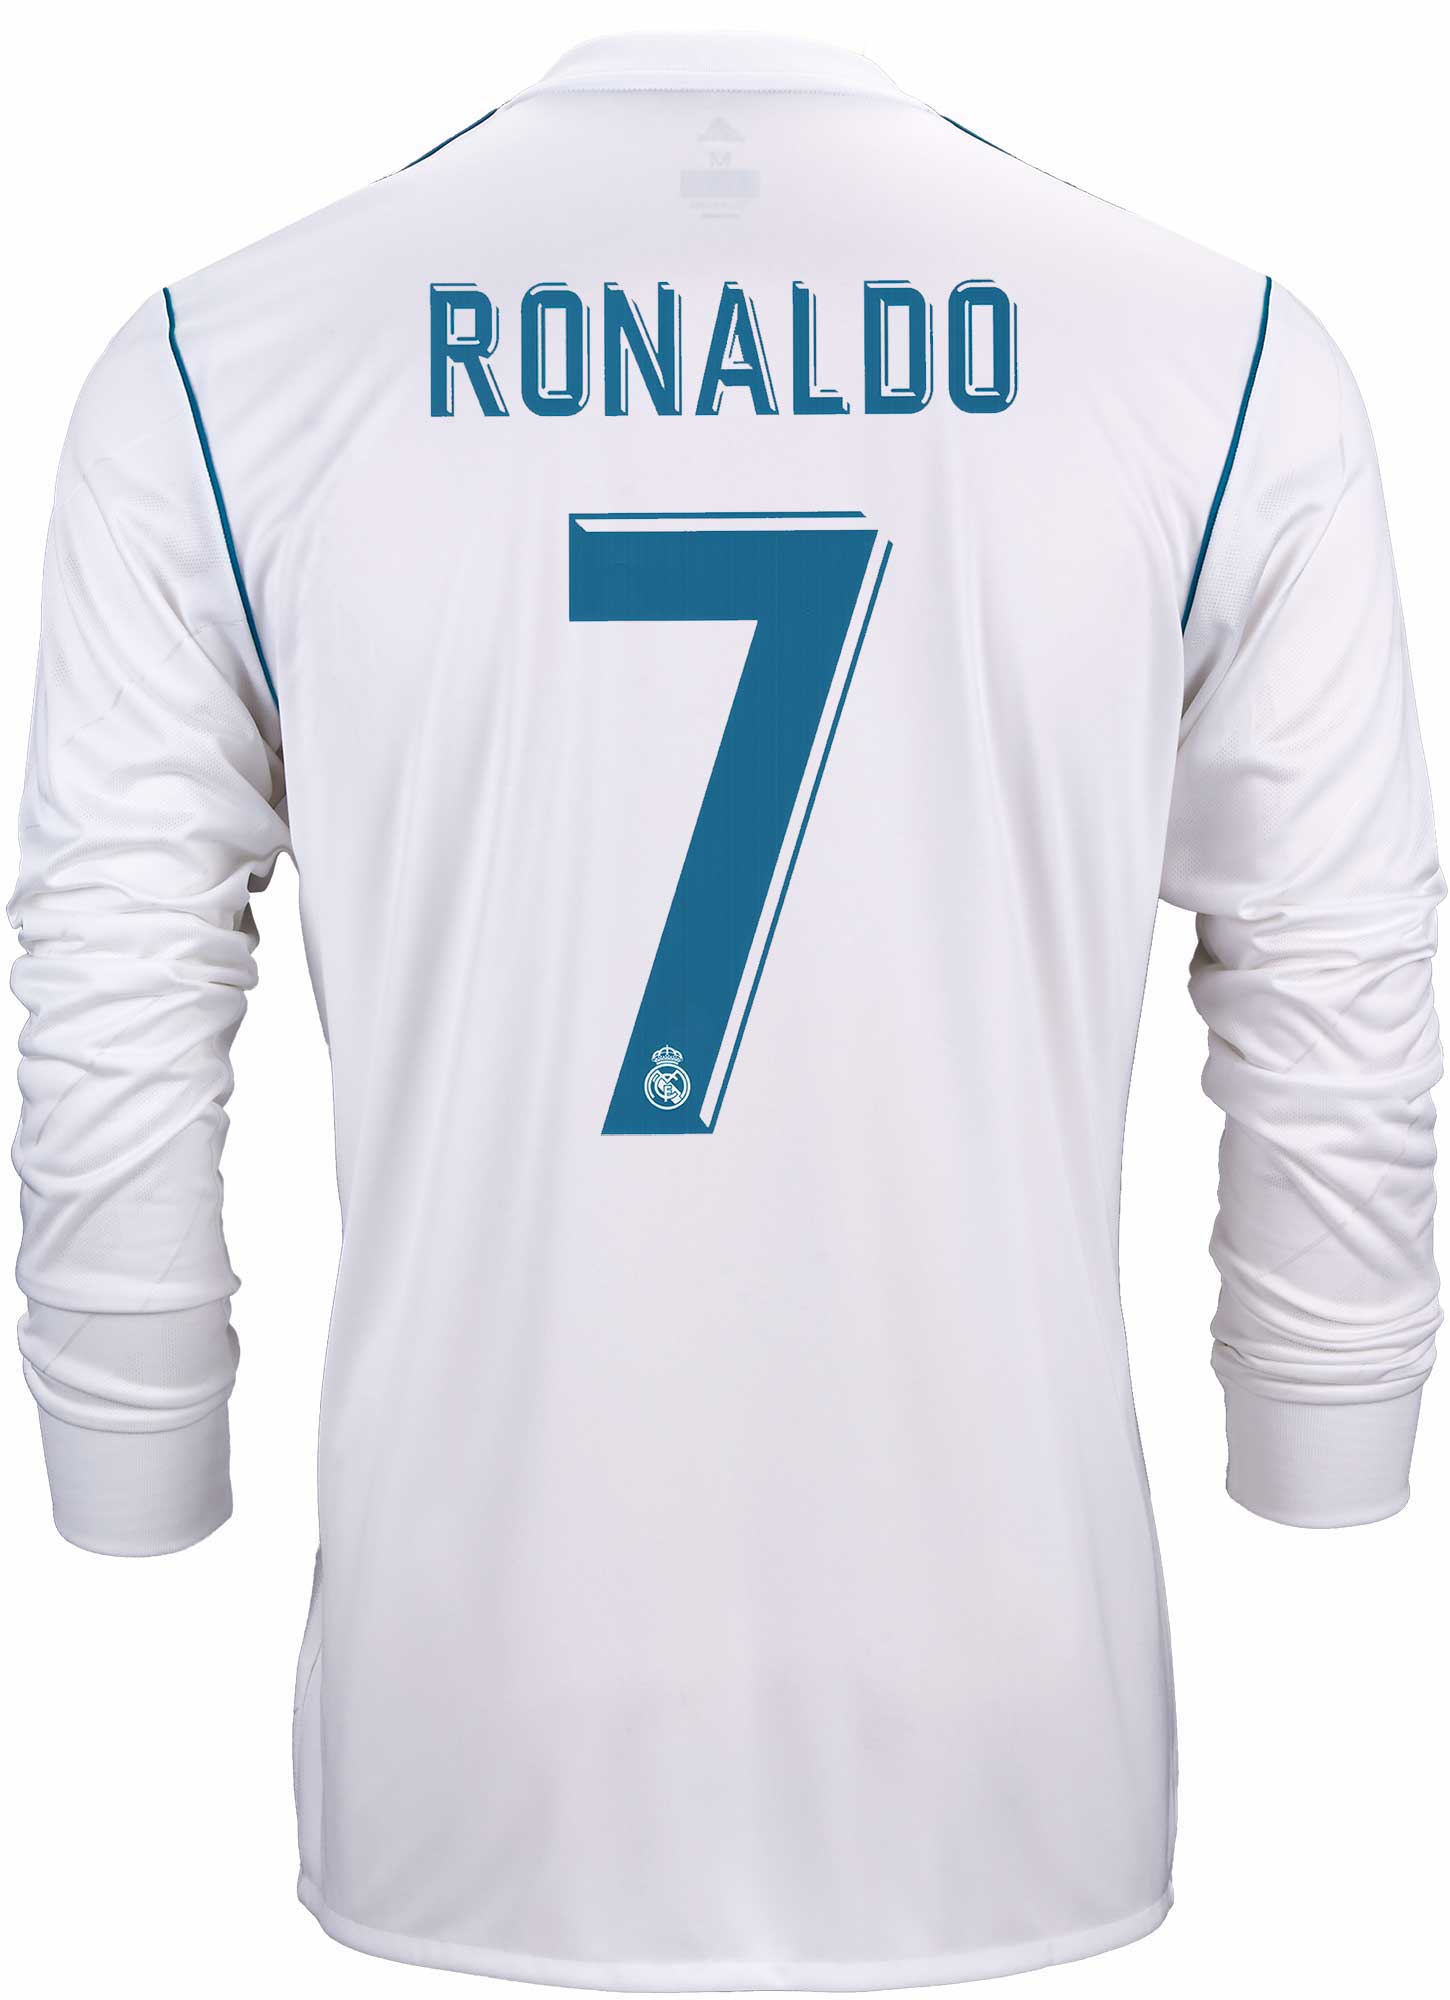 Ronaldo Real Madrid Jersey Wallpaper - 2020 21 Real Madrid 7 RONALDO